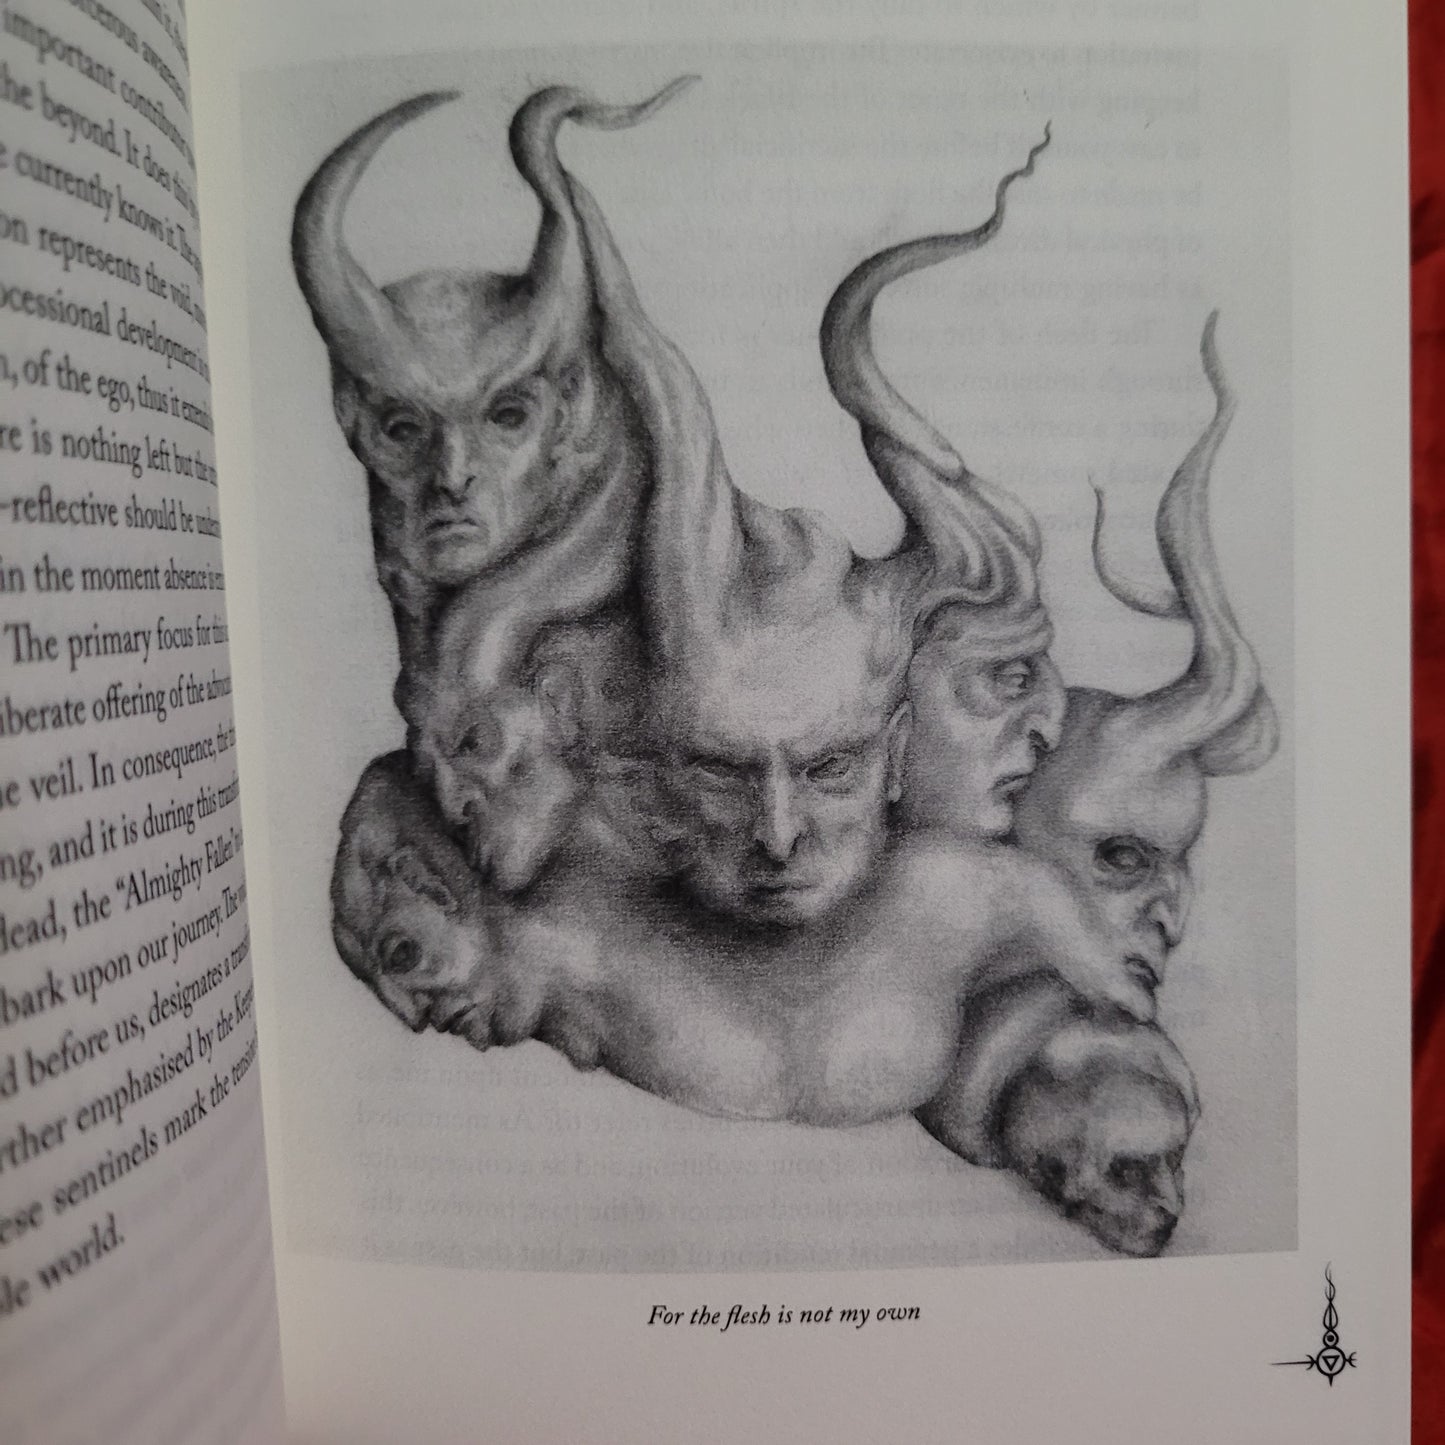 Book of the Black Dragon Volume 1 by Peter Hamilton-Giles (Atramentous Press, 2021) Second Edition Hardcover